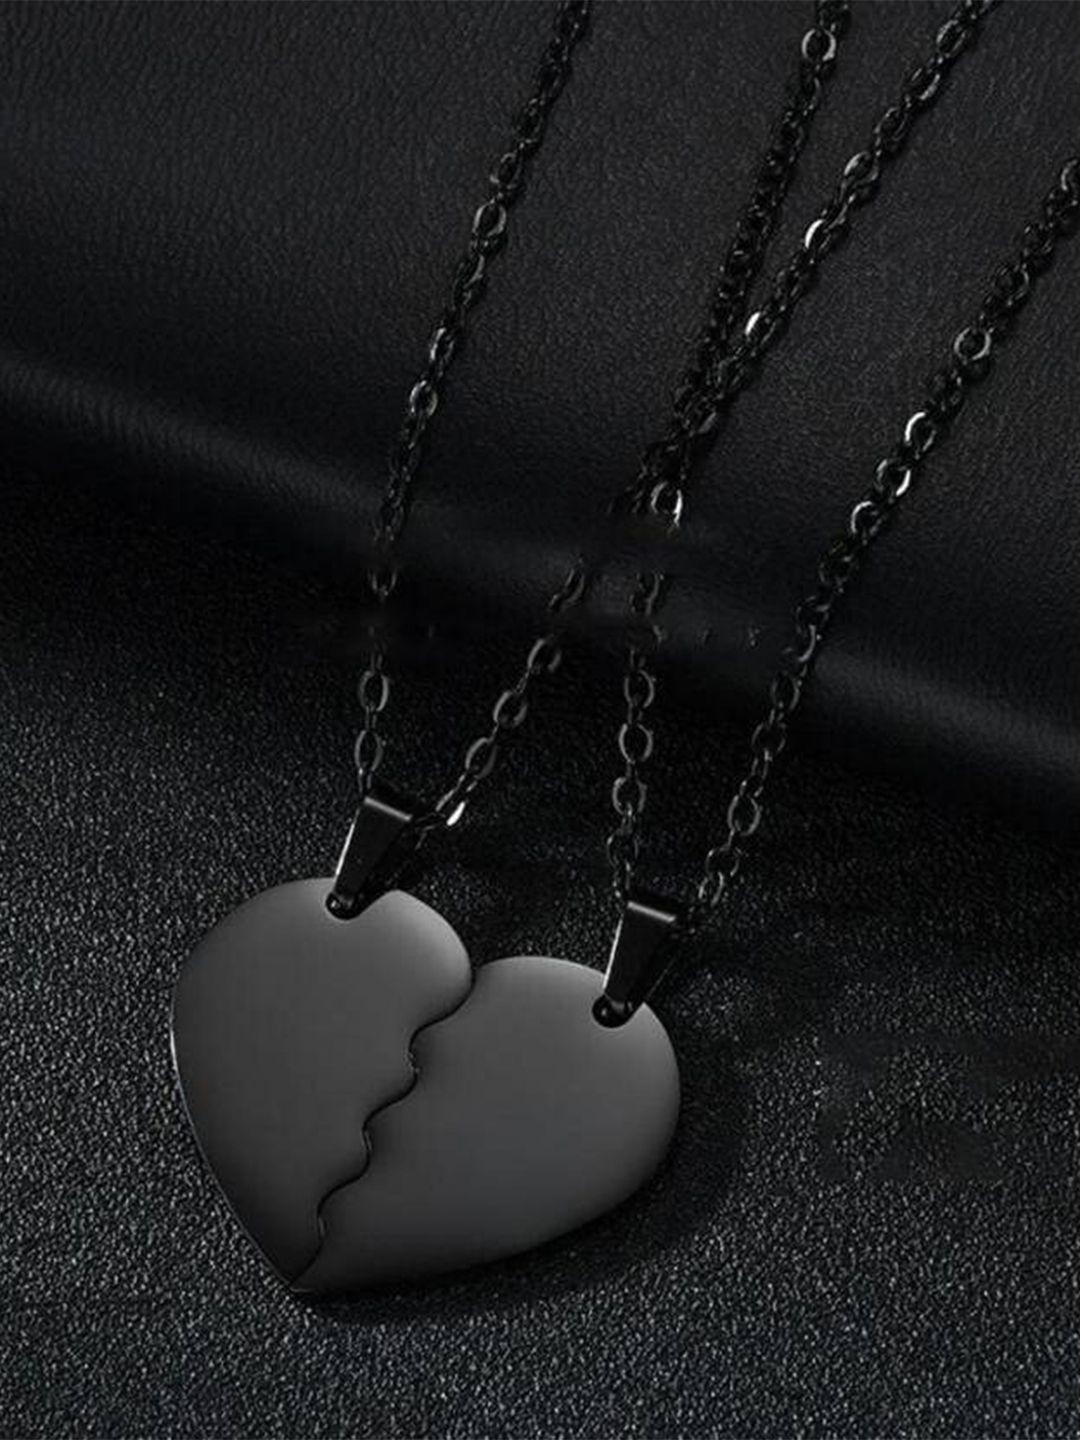 vien best friend forever two half hearts pendants necklace